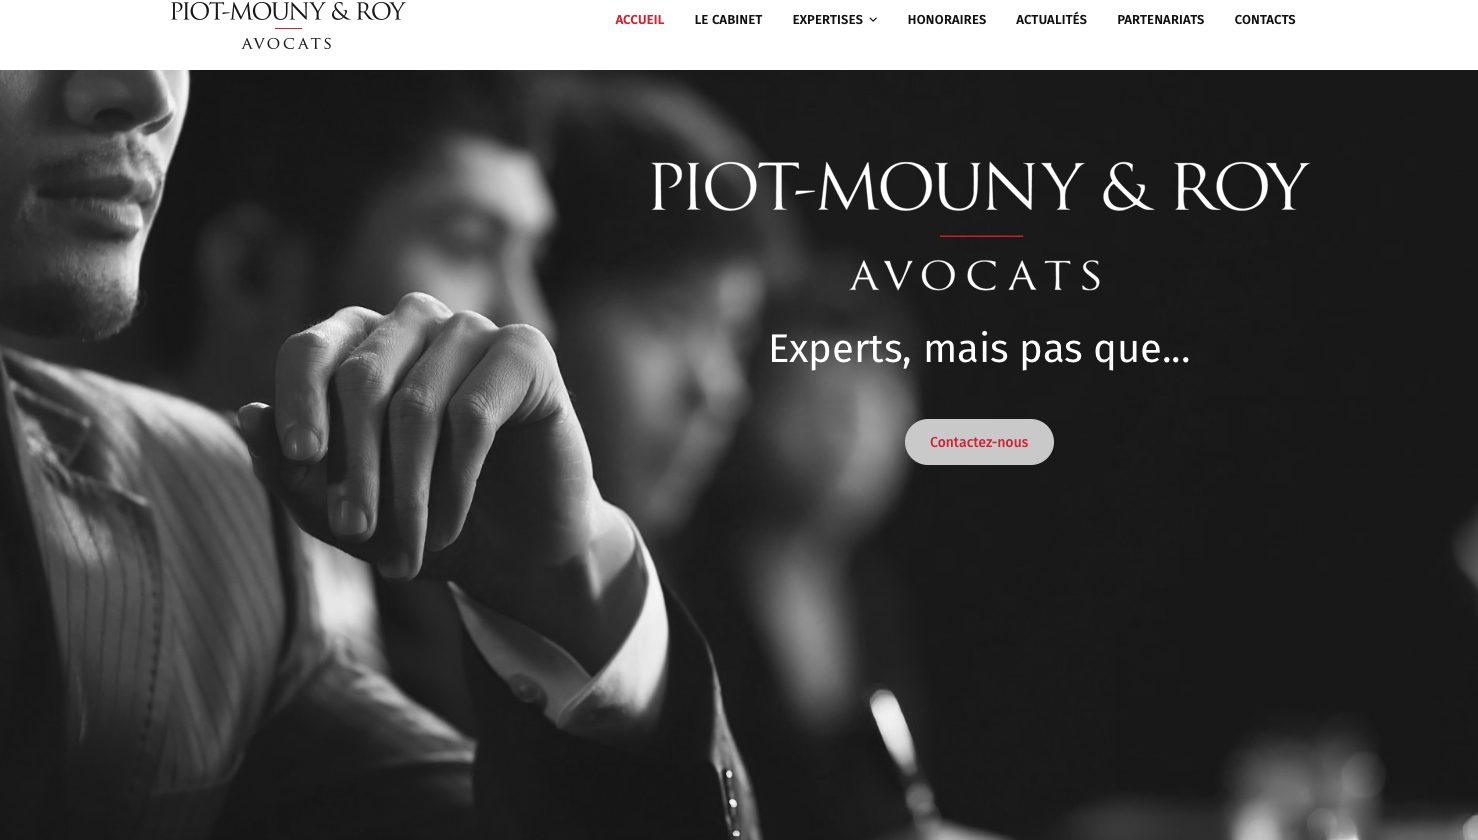 Piot-Mouny & Roy Avocats